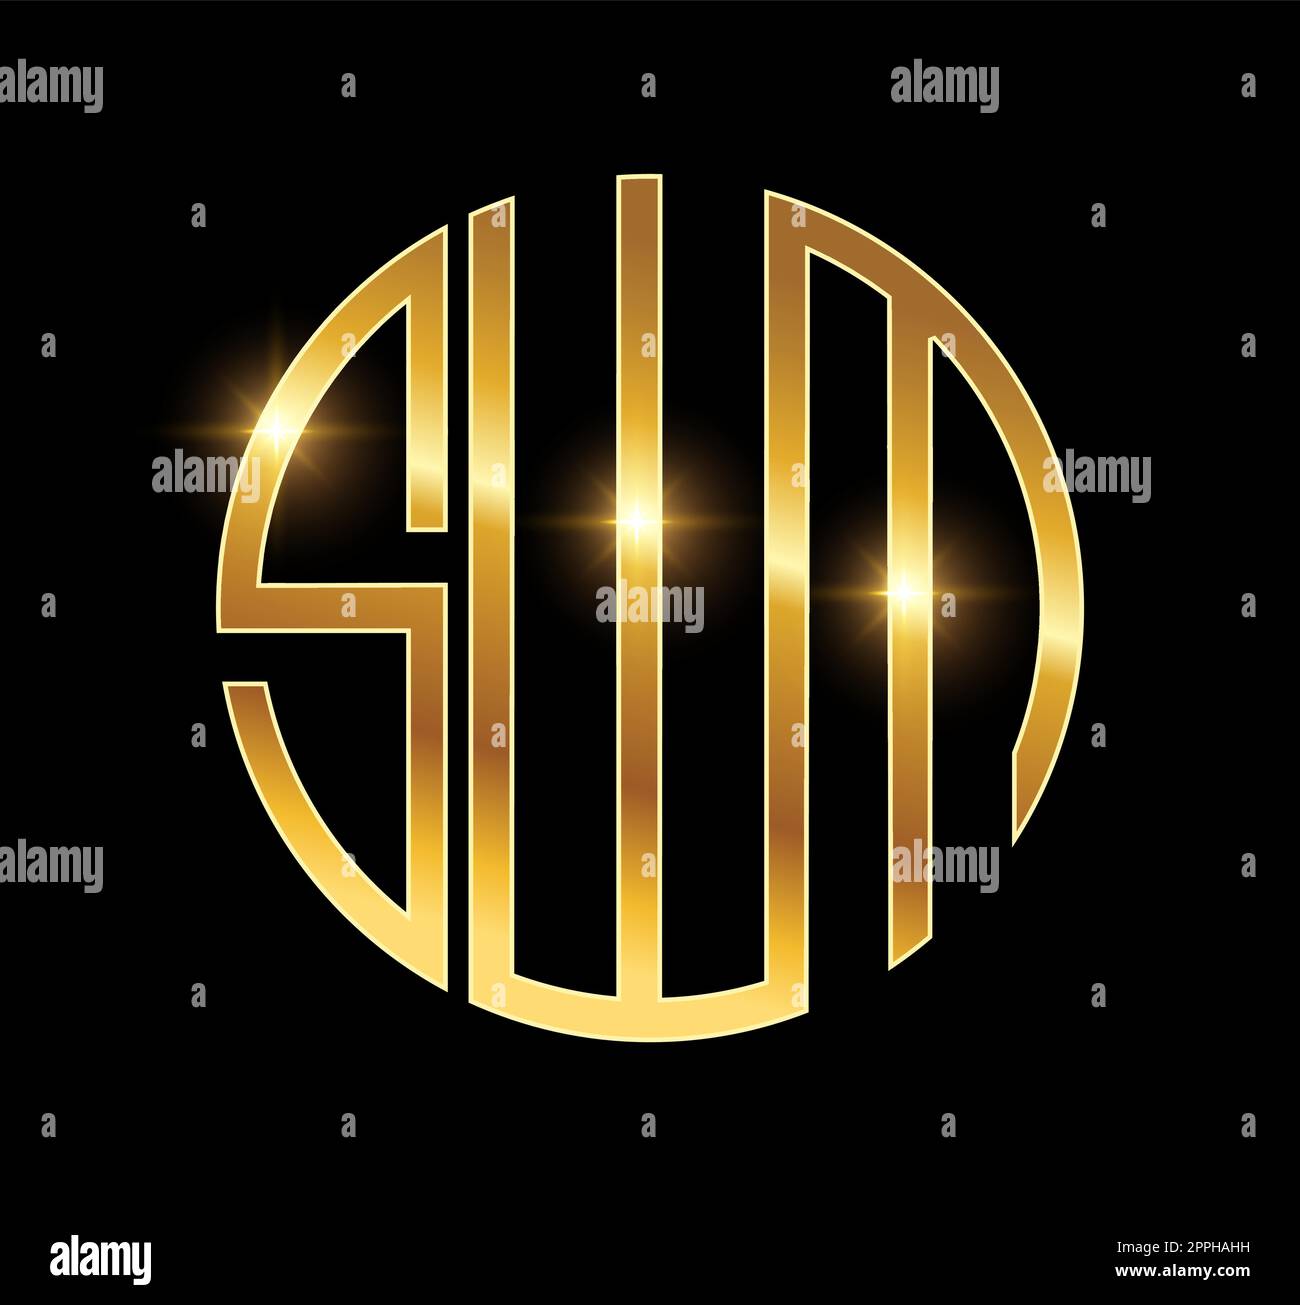 Swm logo design Stock Vector Images - Alamy